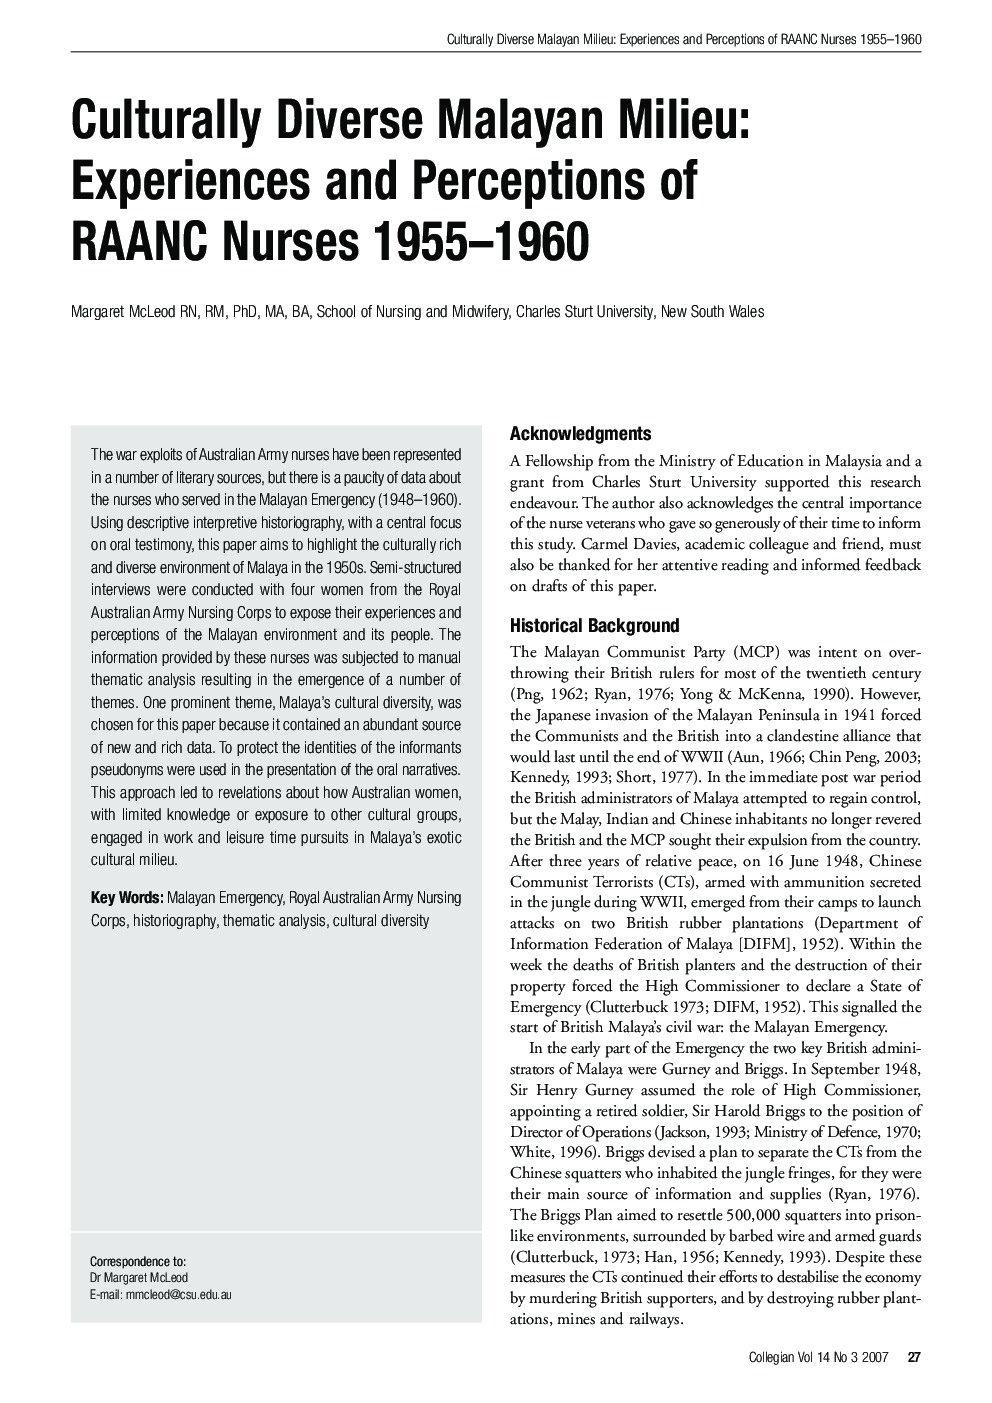 Culturally Diverse Malayan Milieu: Experiences and Perceptions of RAANC Nurses 1955-1960